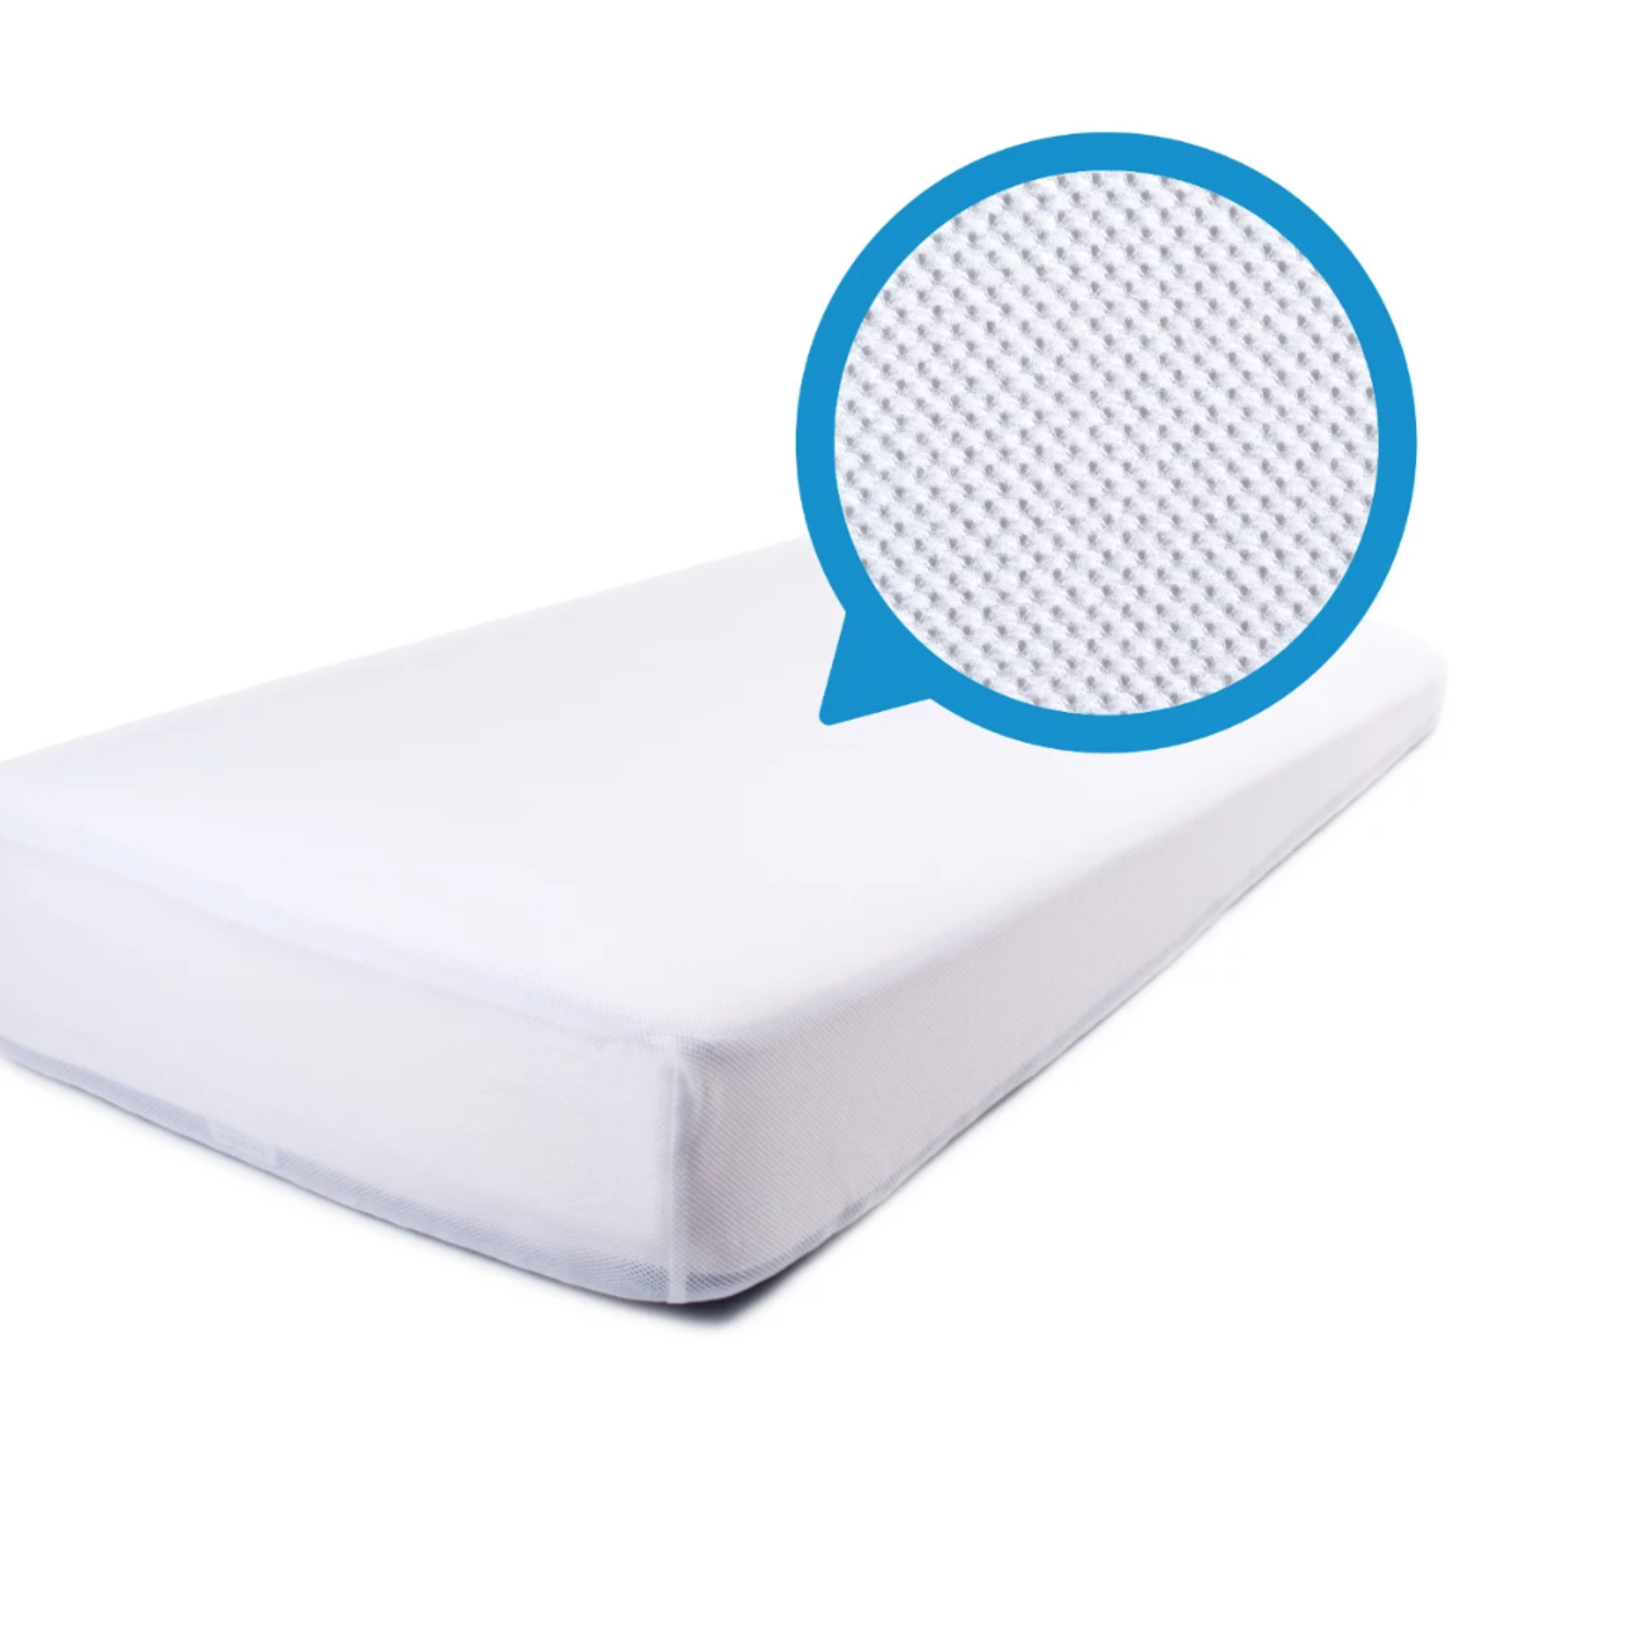 AeroSleep Aerosleep - Sleep Safe Fitted Sheet White Premium 70x140